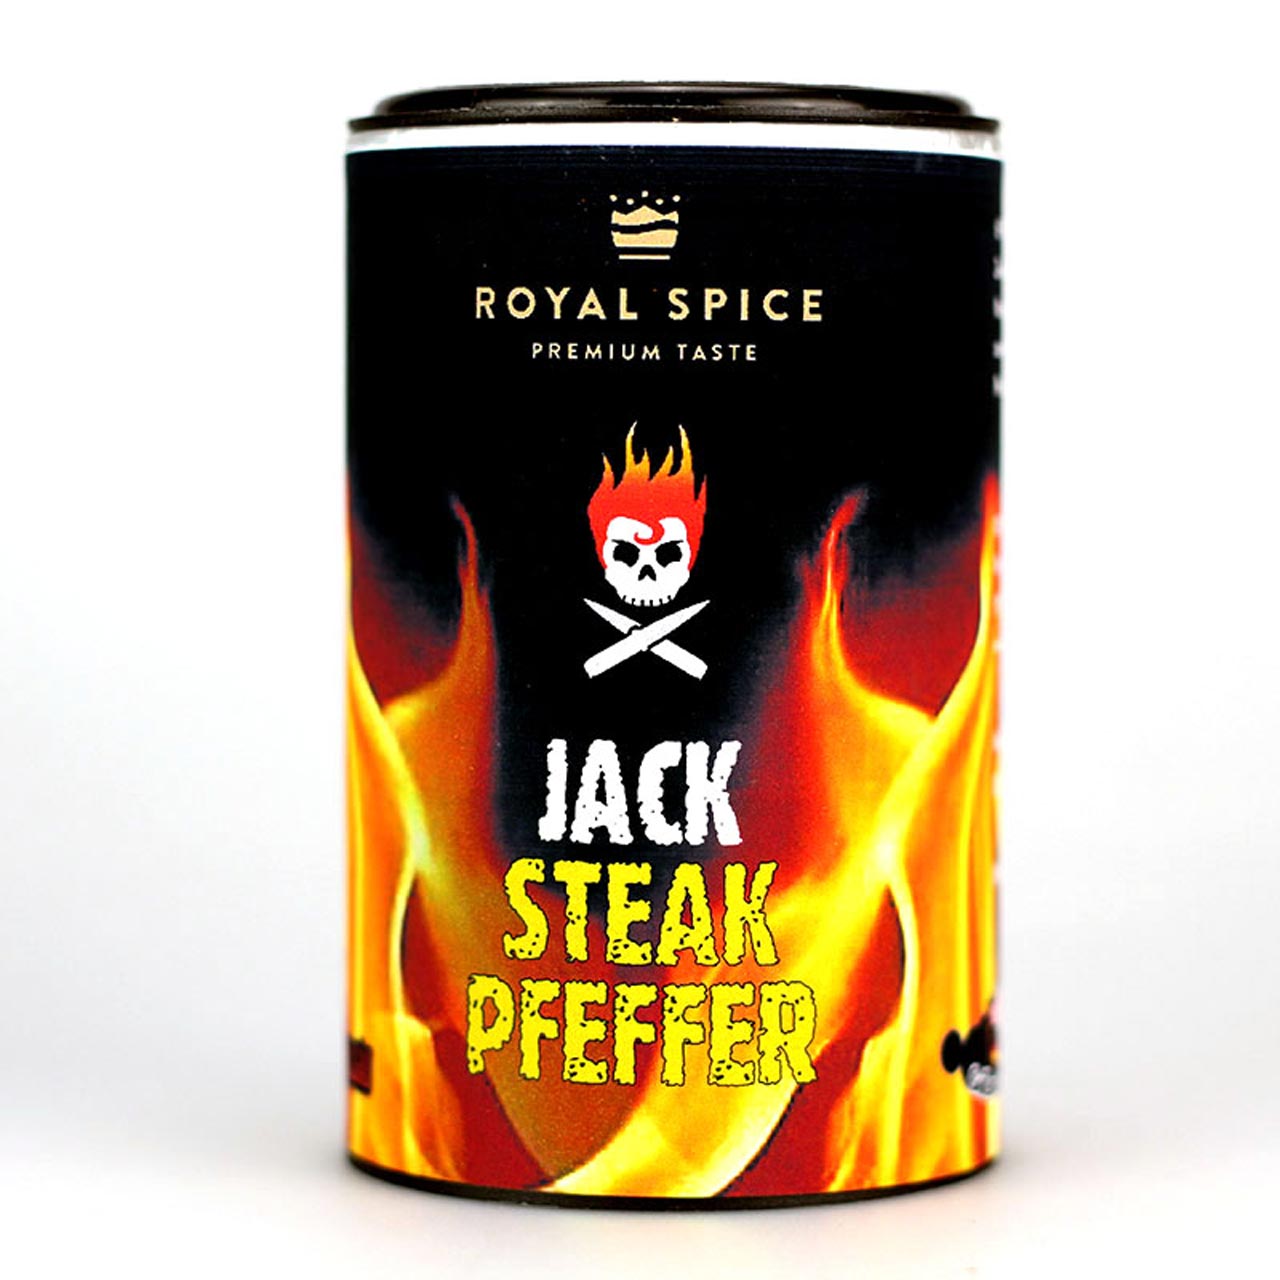 Royal Spice - Jack Steakpfeffer 90g